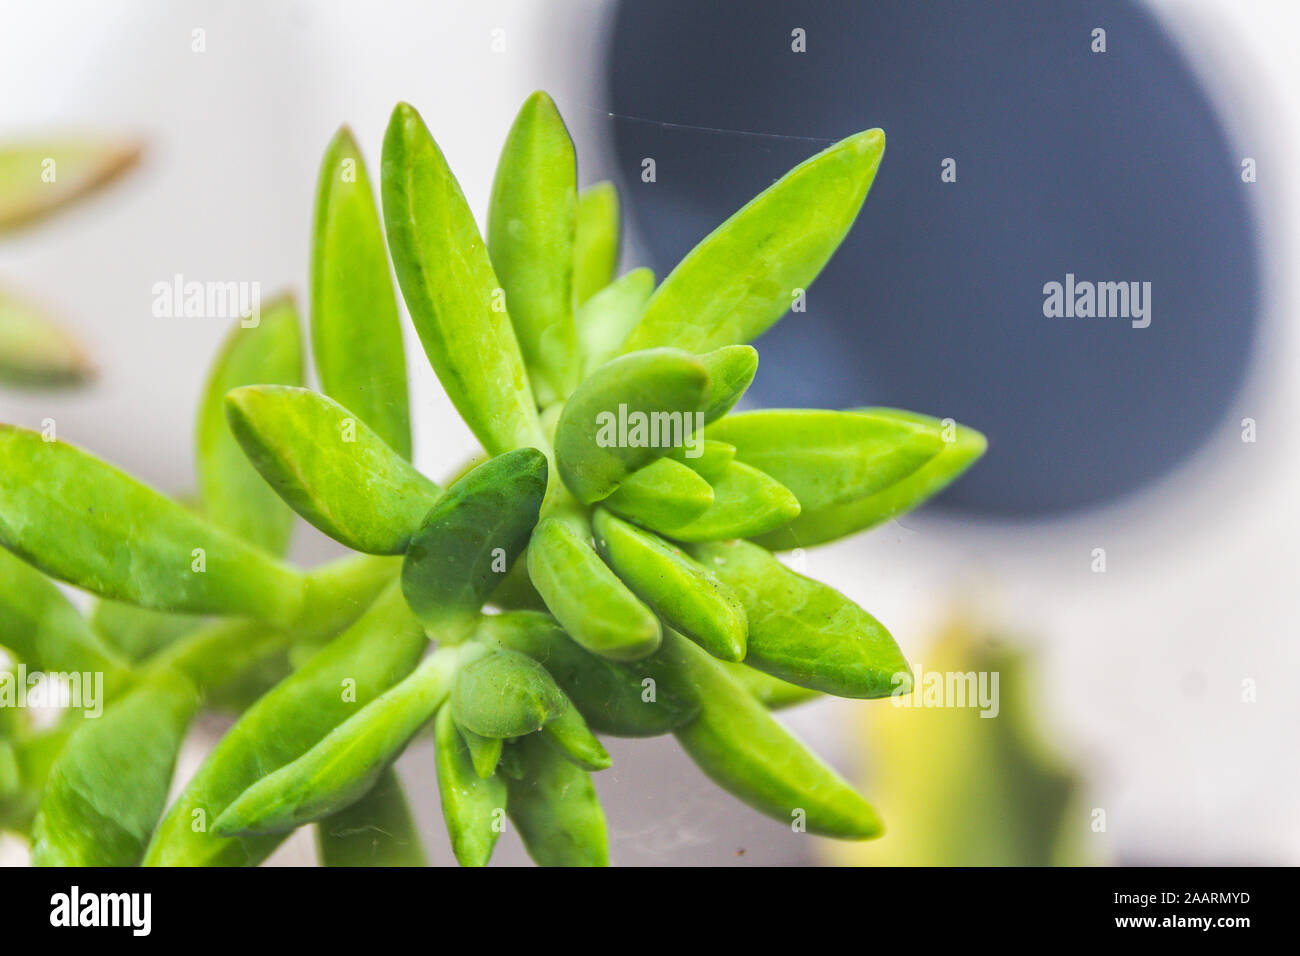 Green cactus plant detail photograph Stock Photo